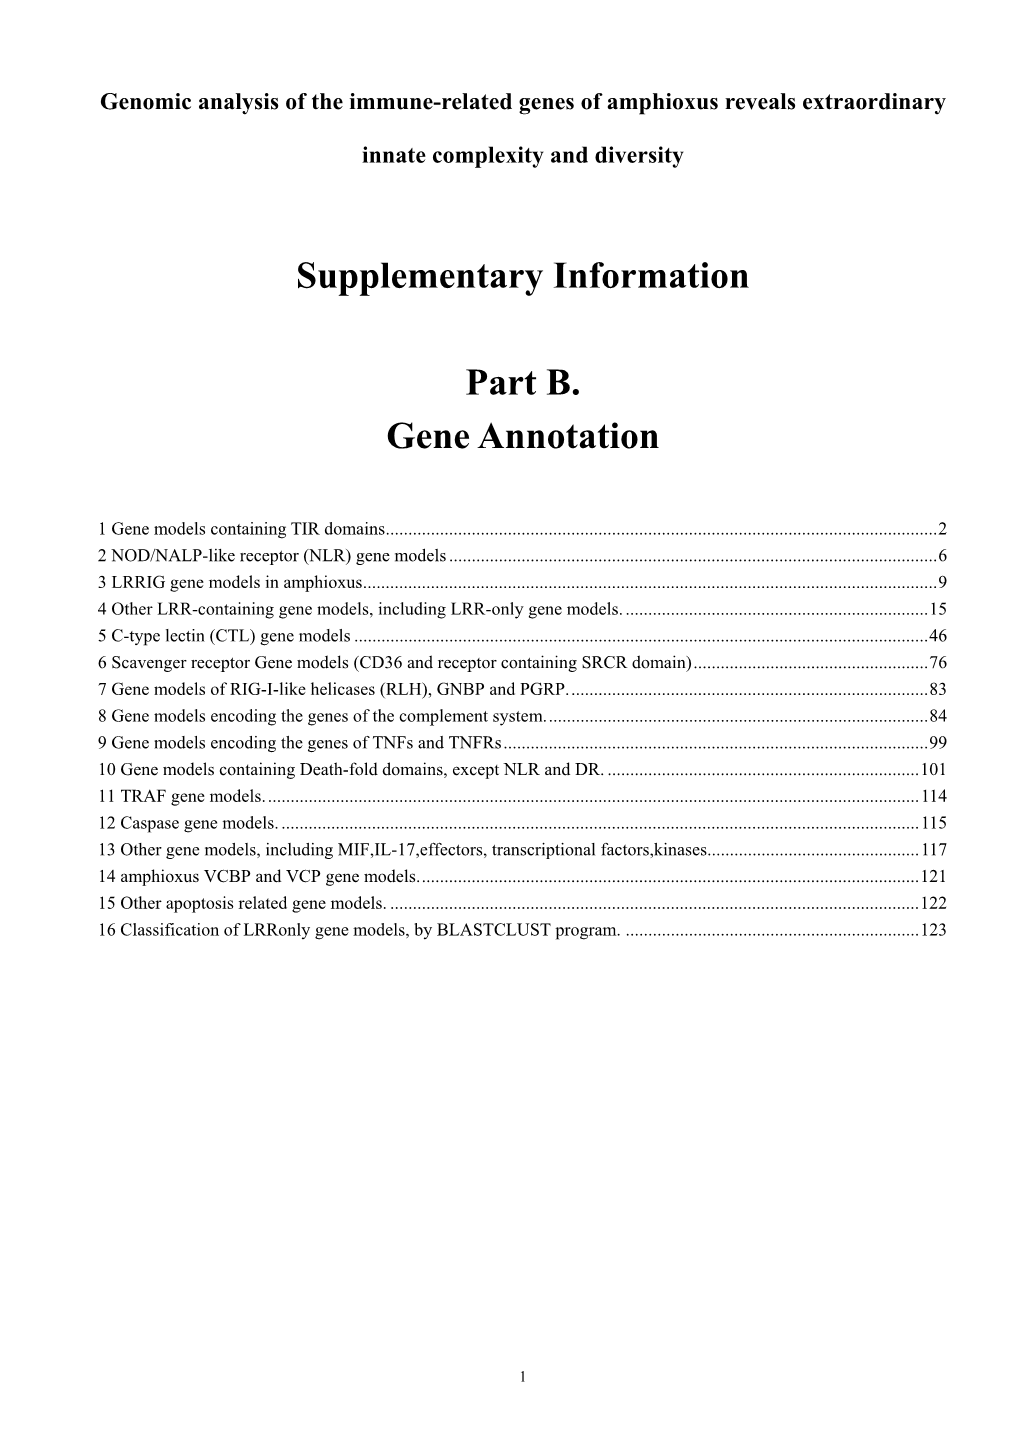 Supplementary Information Part B. Gene Annotation